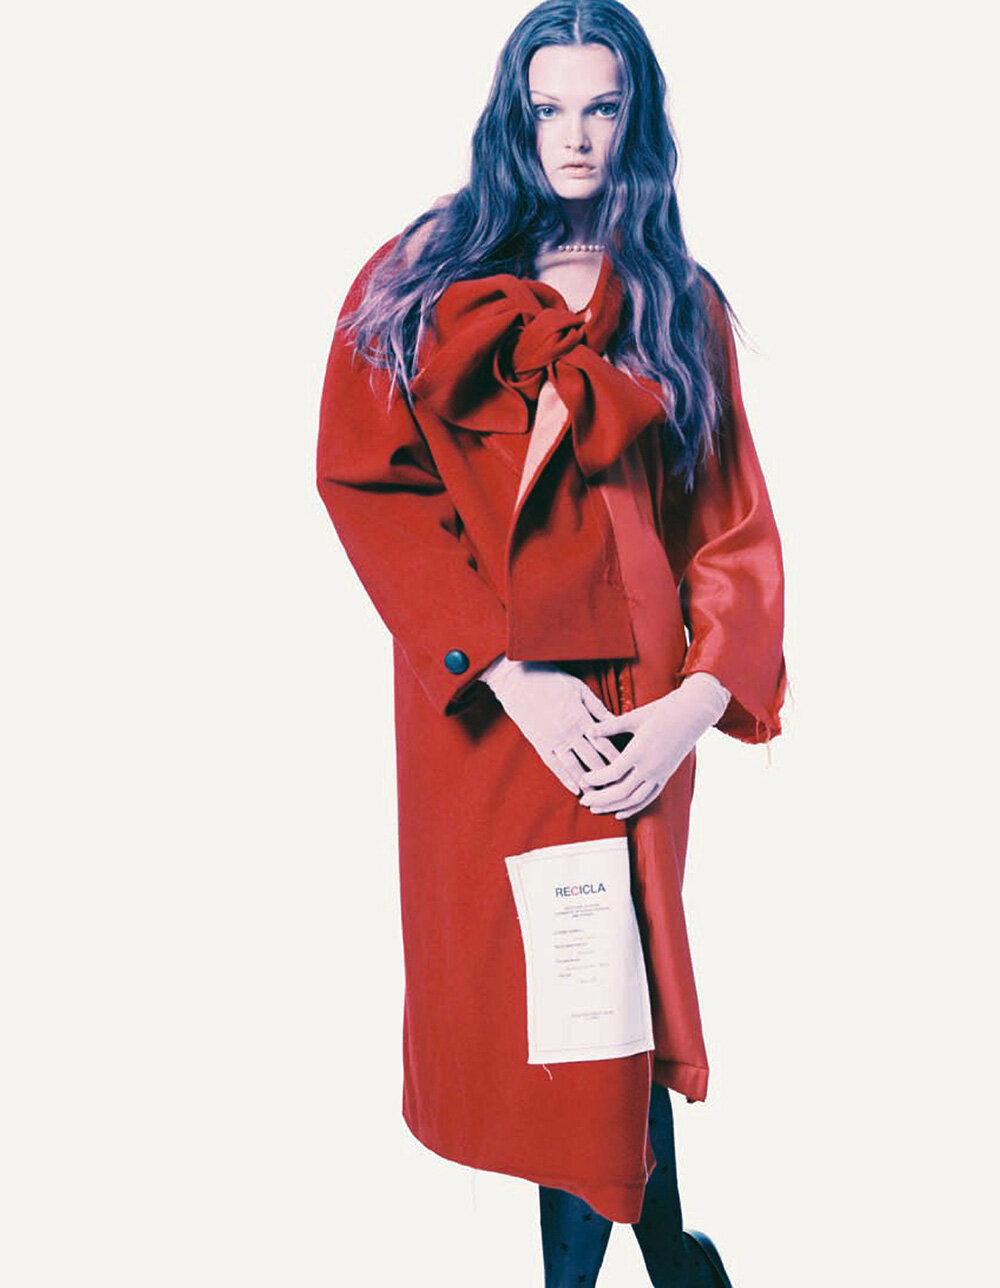 Lulu-Tenney-by-Heji-Shin-for-Vogue-China-November-2020-7.jpg